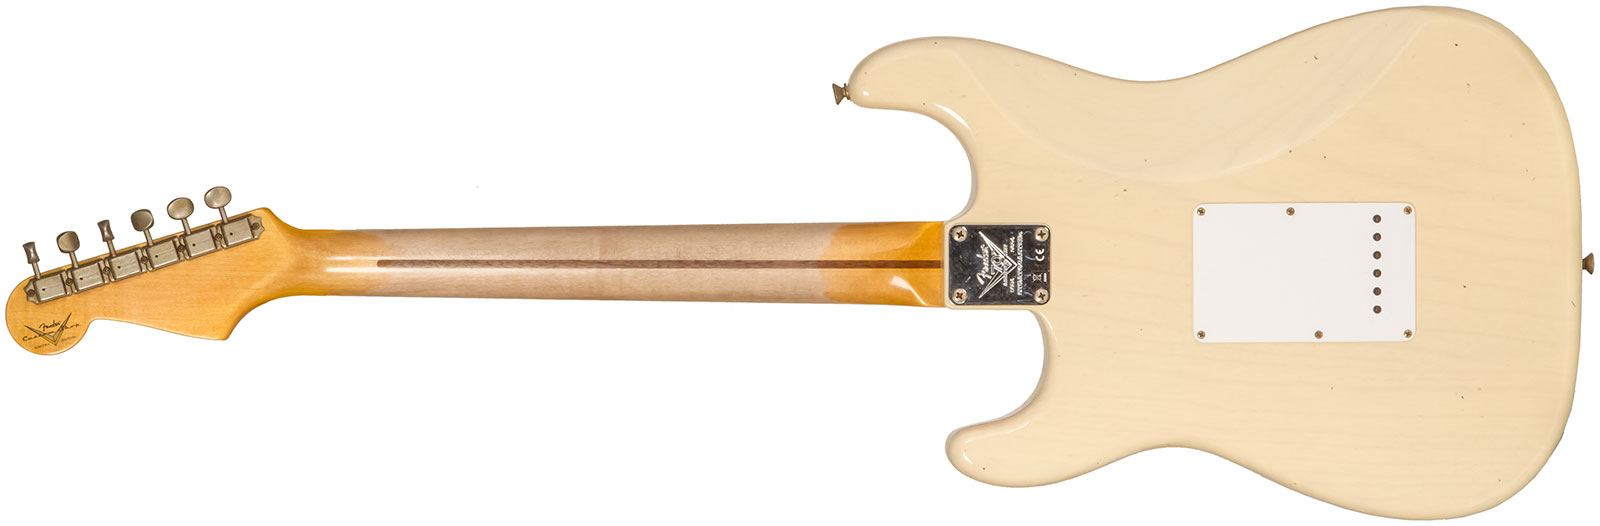 Fender Custom Shop Strat 1954 70th Anniv. 3s Trem Mn #xn4159 - Journeyman Relic Vintage Blonde - Str shape electric guitar - Variation 1